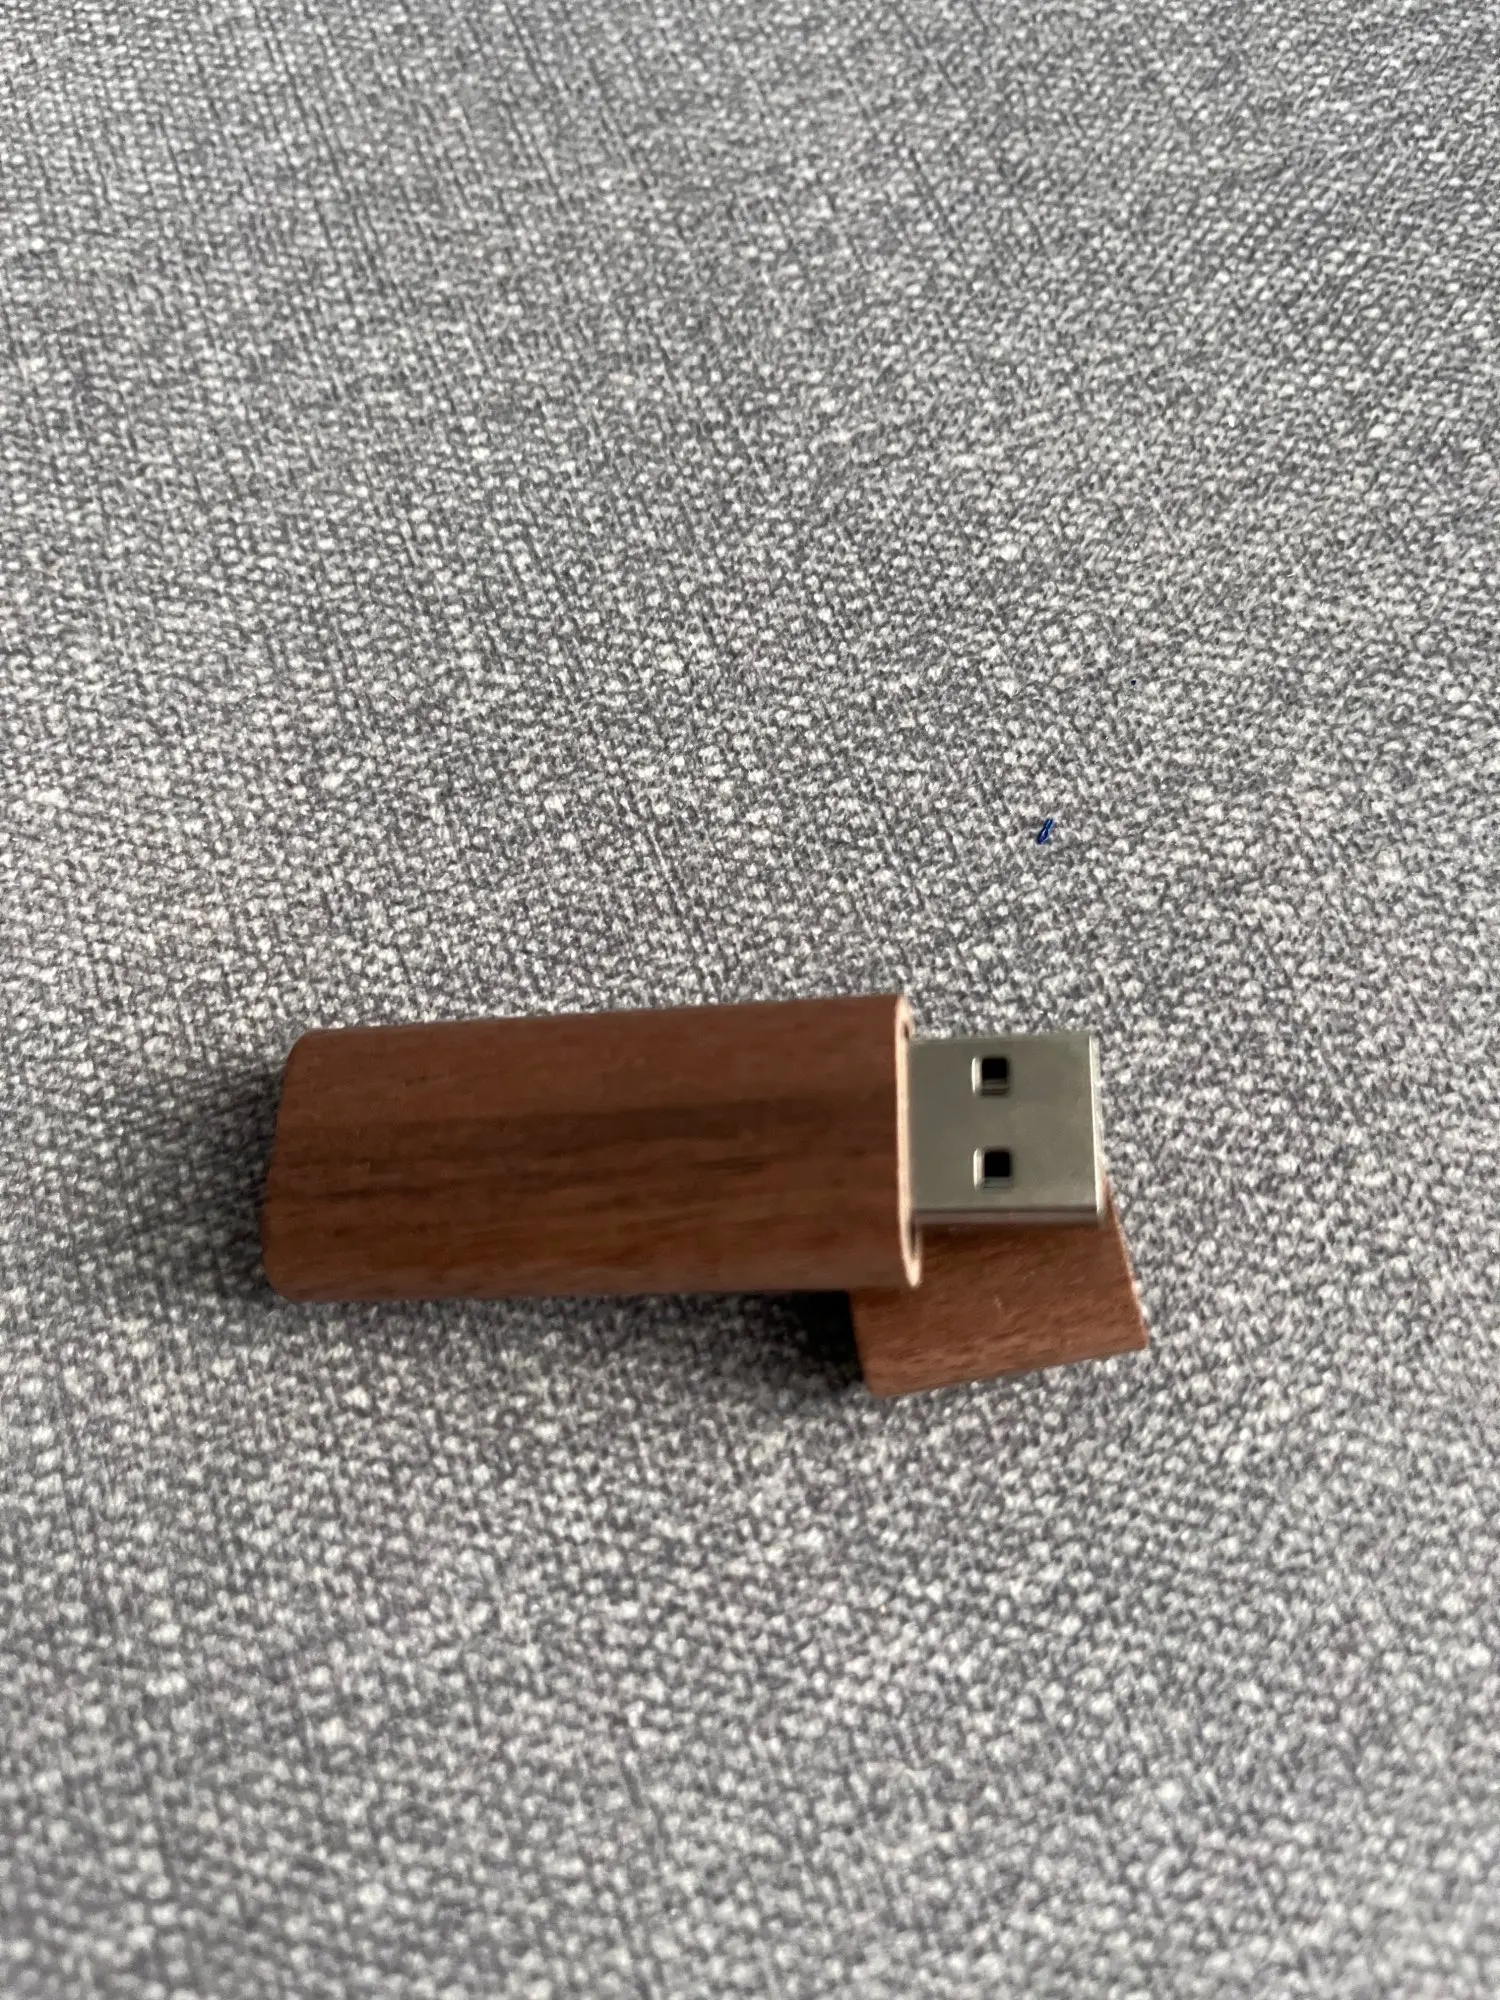 JASTER free Customized LOGO USB 2.0 Wooden bamboo usb with box usb flash drive Memory stick pen drive pendrive 4GB 16GB 32GB64